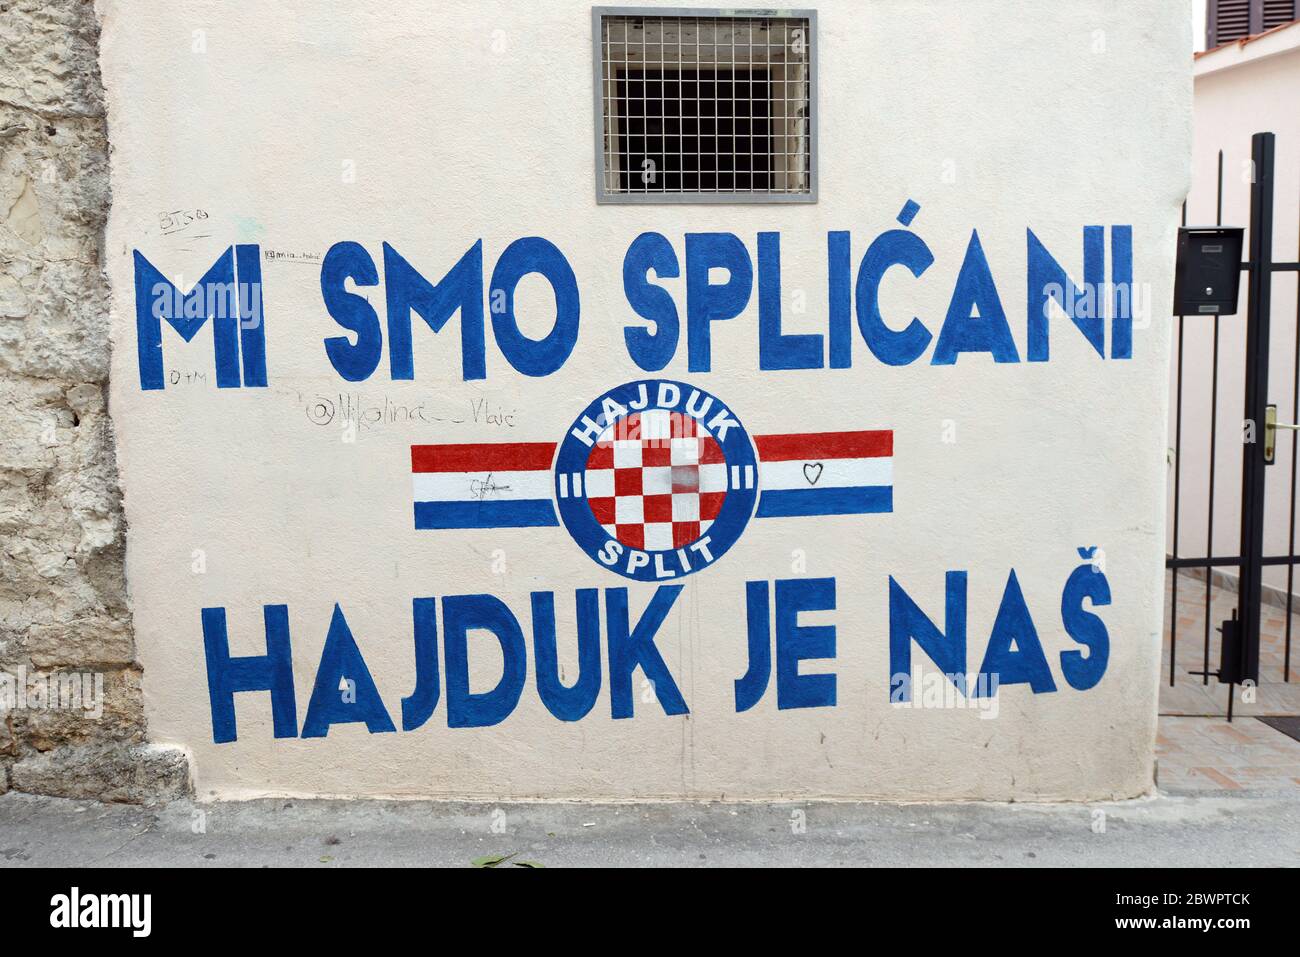 Hajduk Split Archives - FOOTBALL FASHION